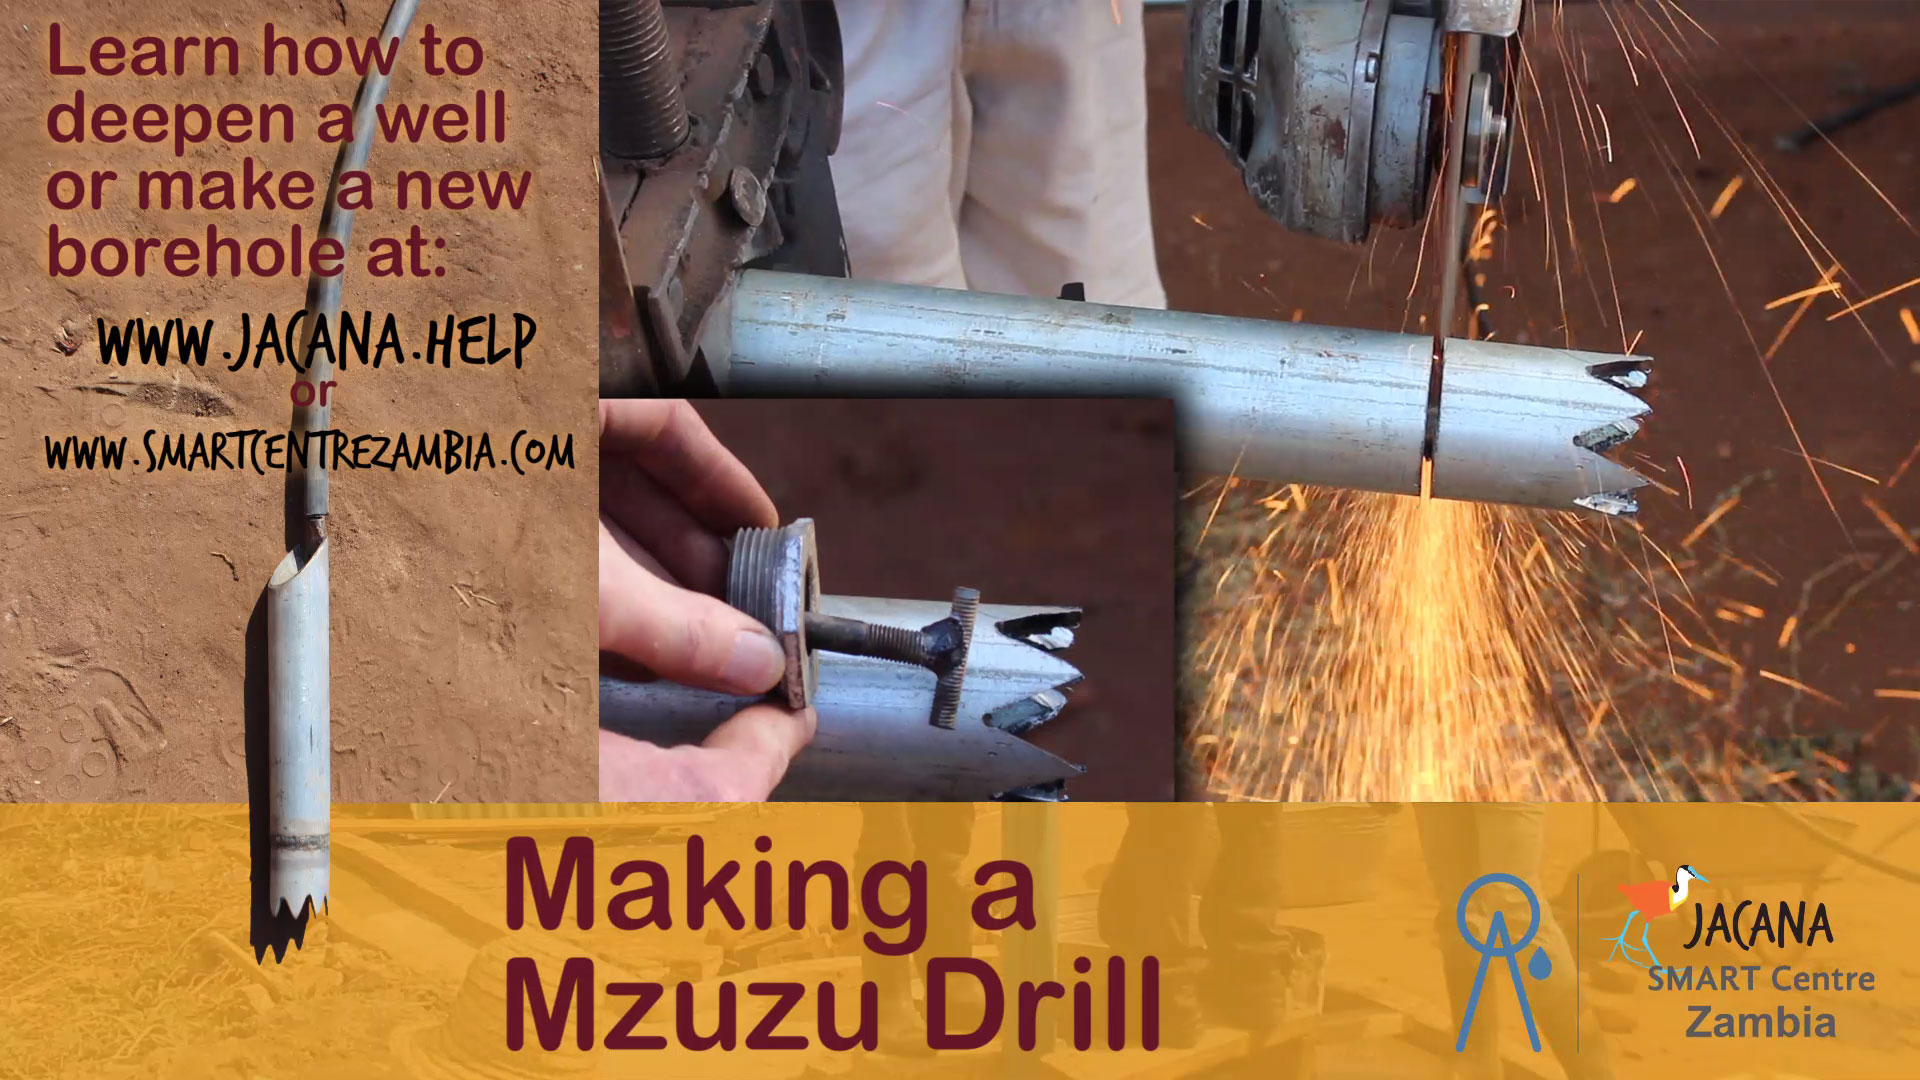 Making a Mzuzu drill